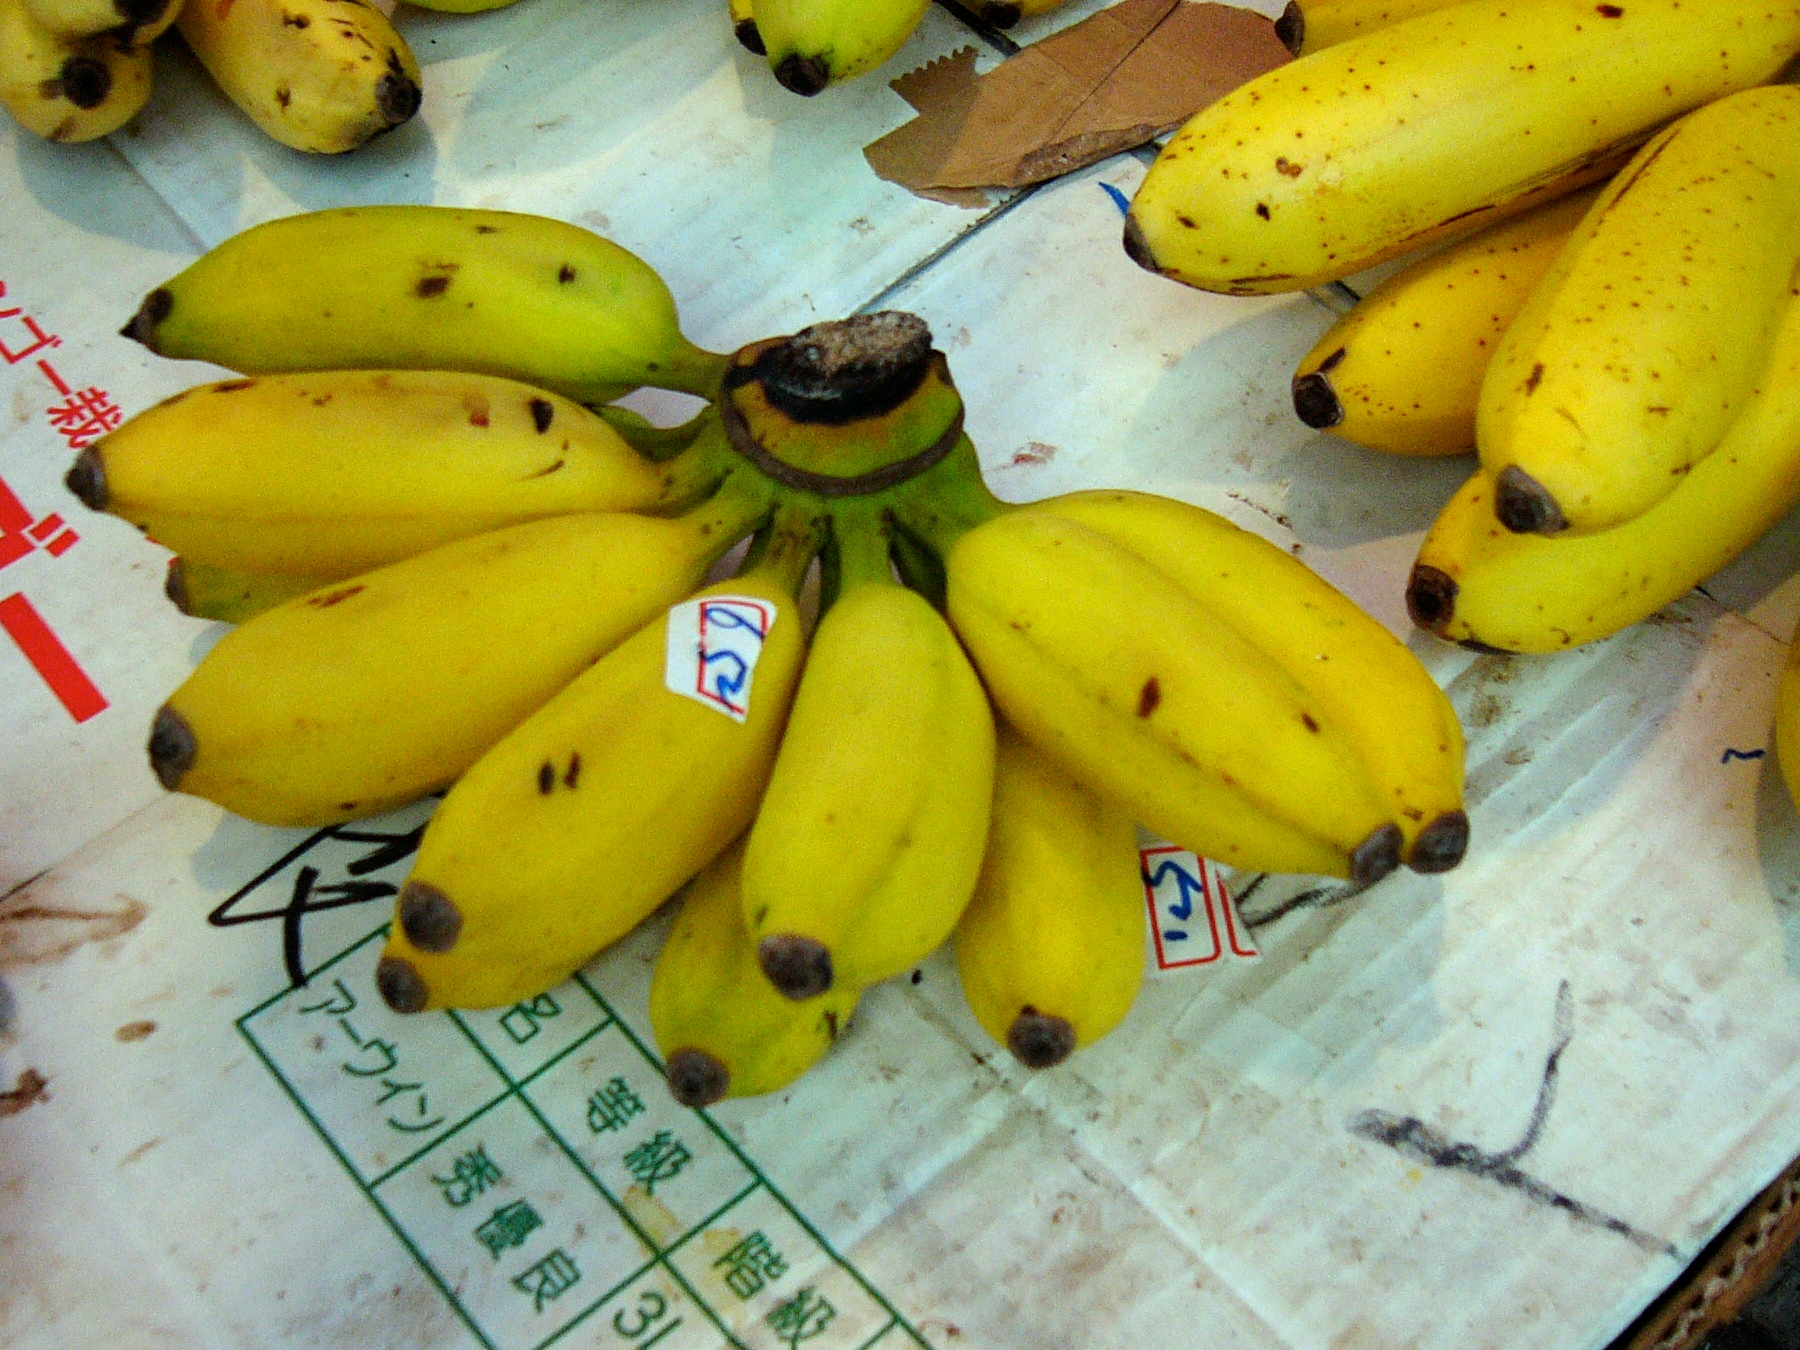 abena adubea recommends Okinawa Banana Show